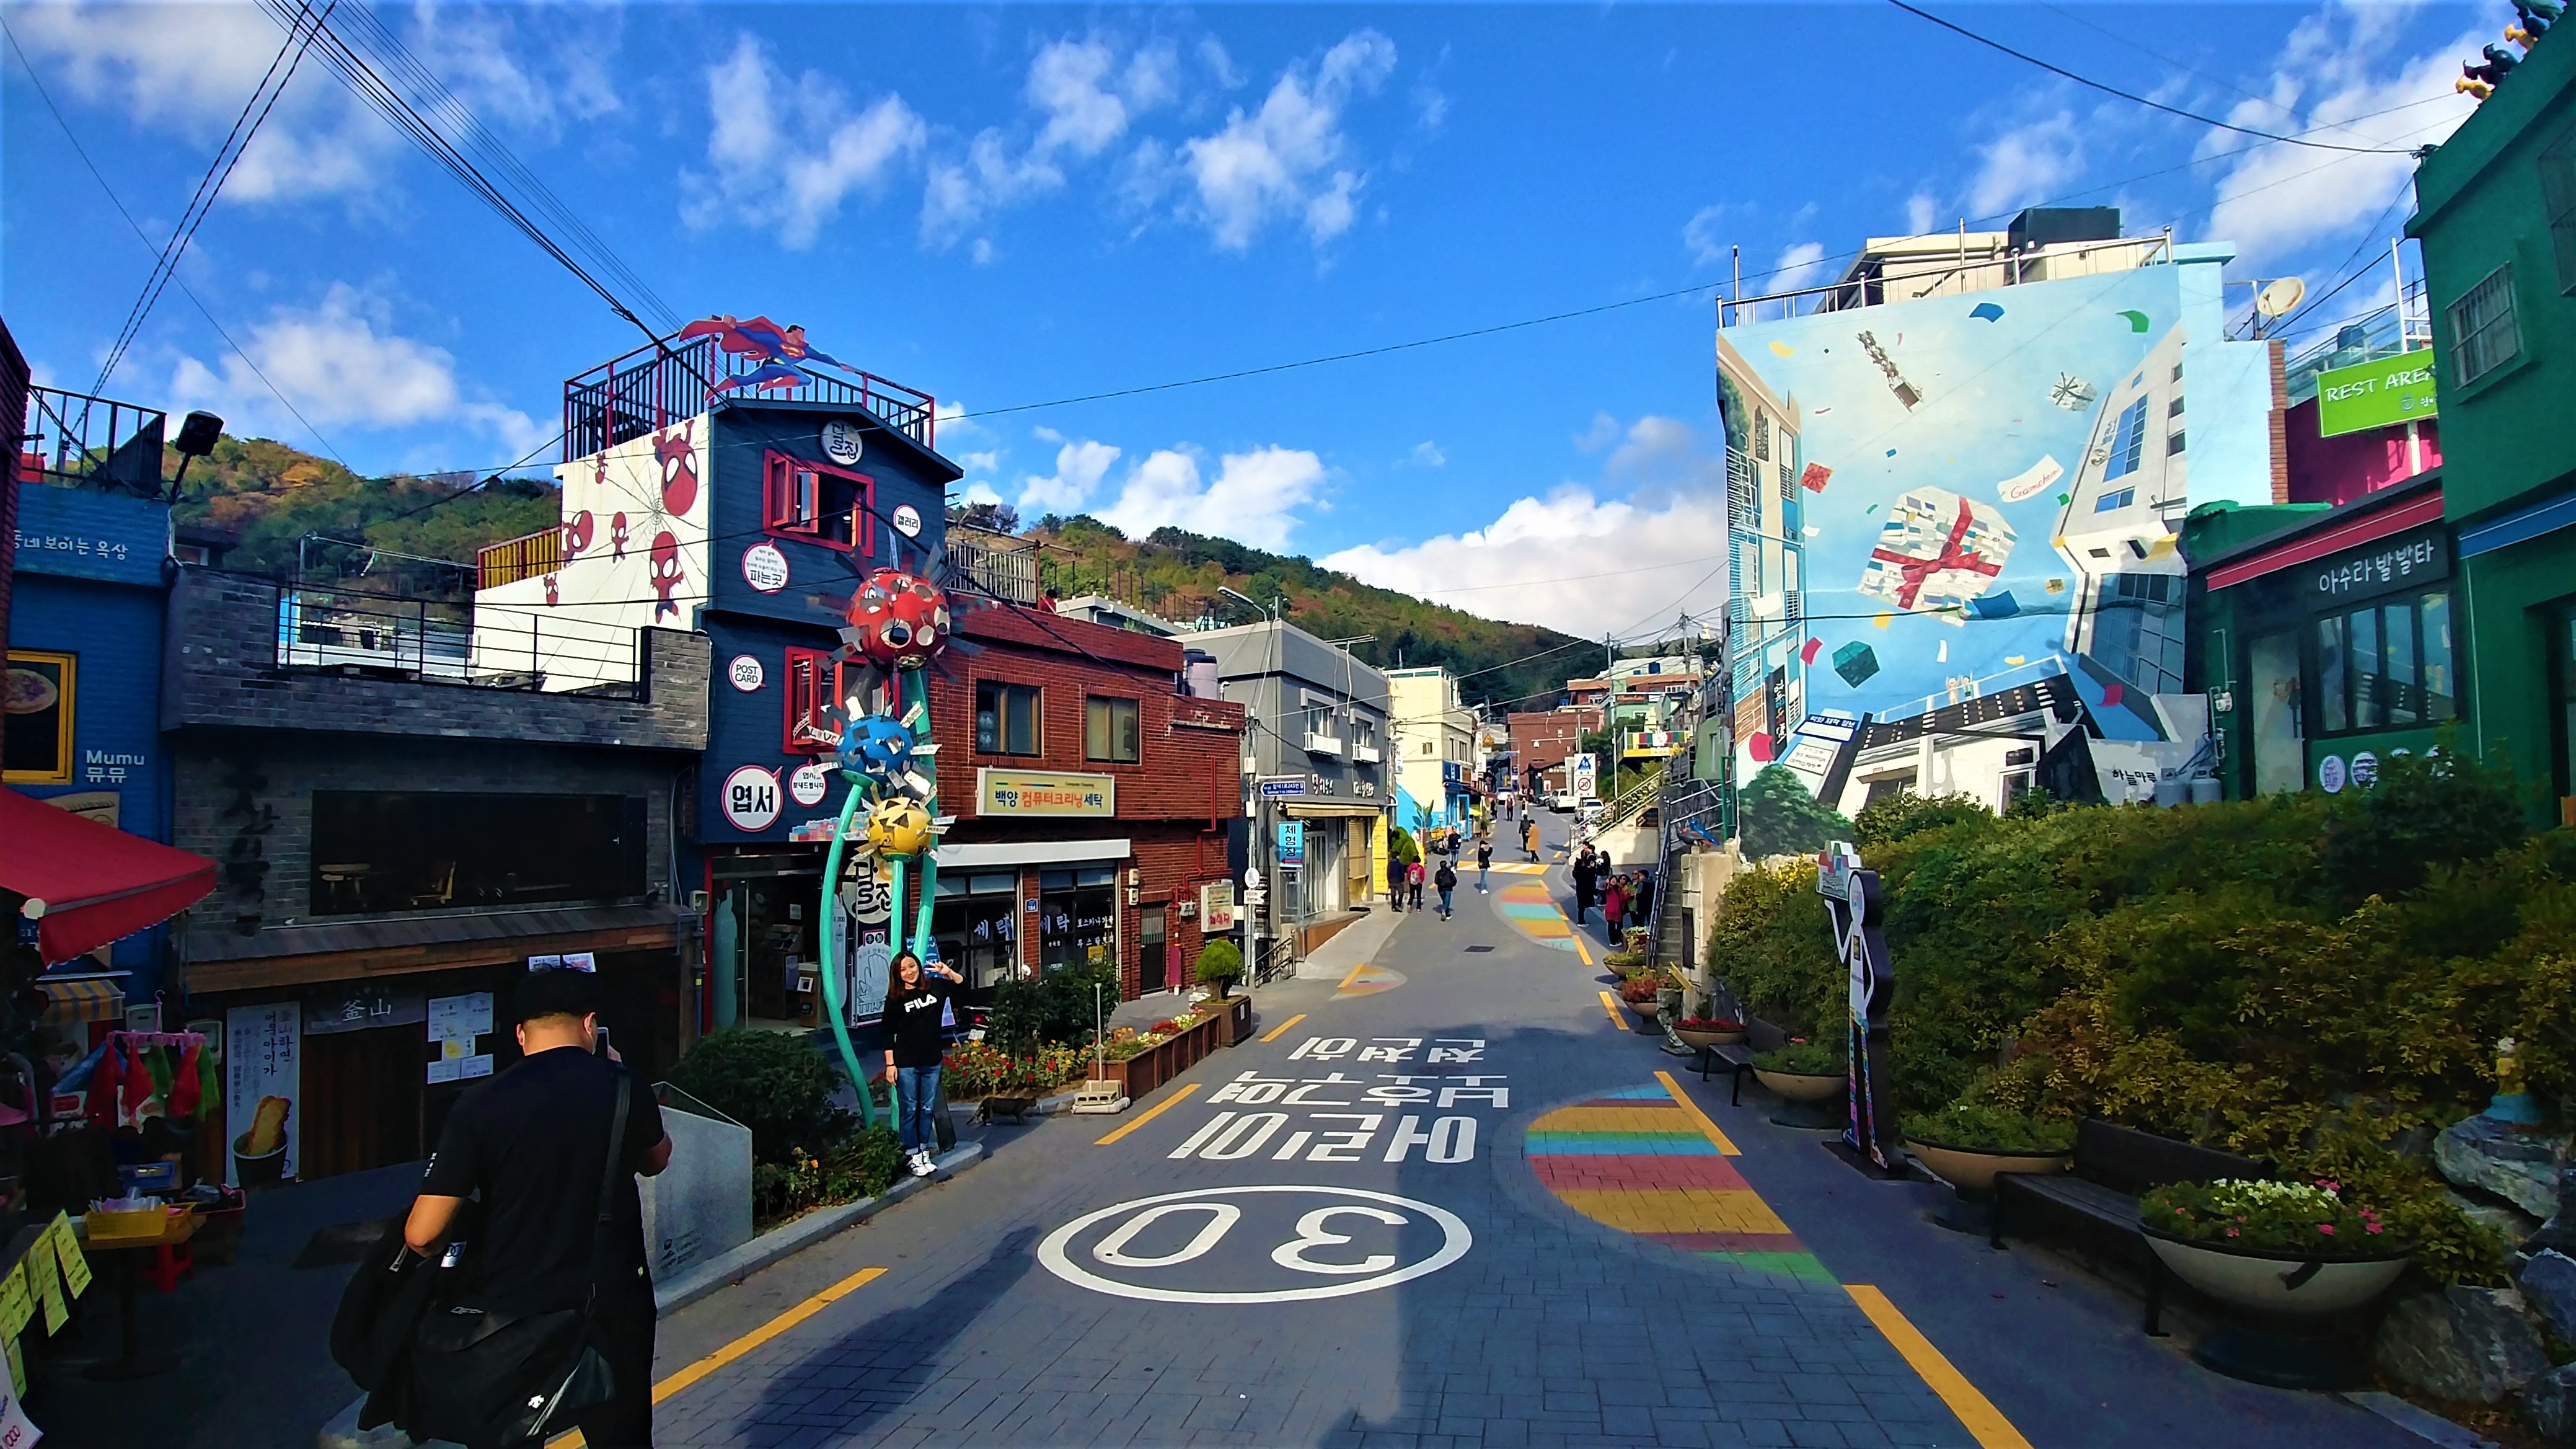 Busan street art gamcheon village que voir petit prince blog voyage asie arpenter le chemin